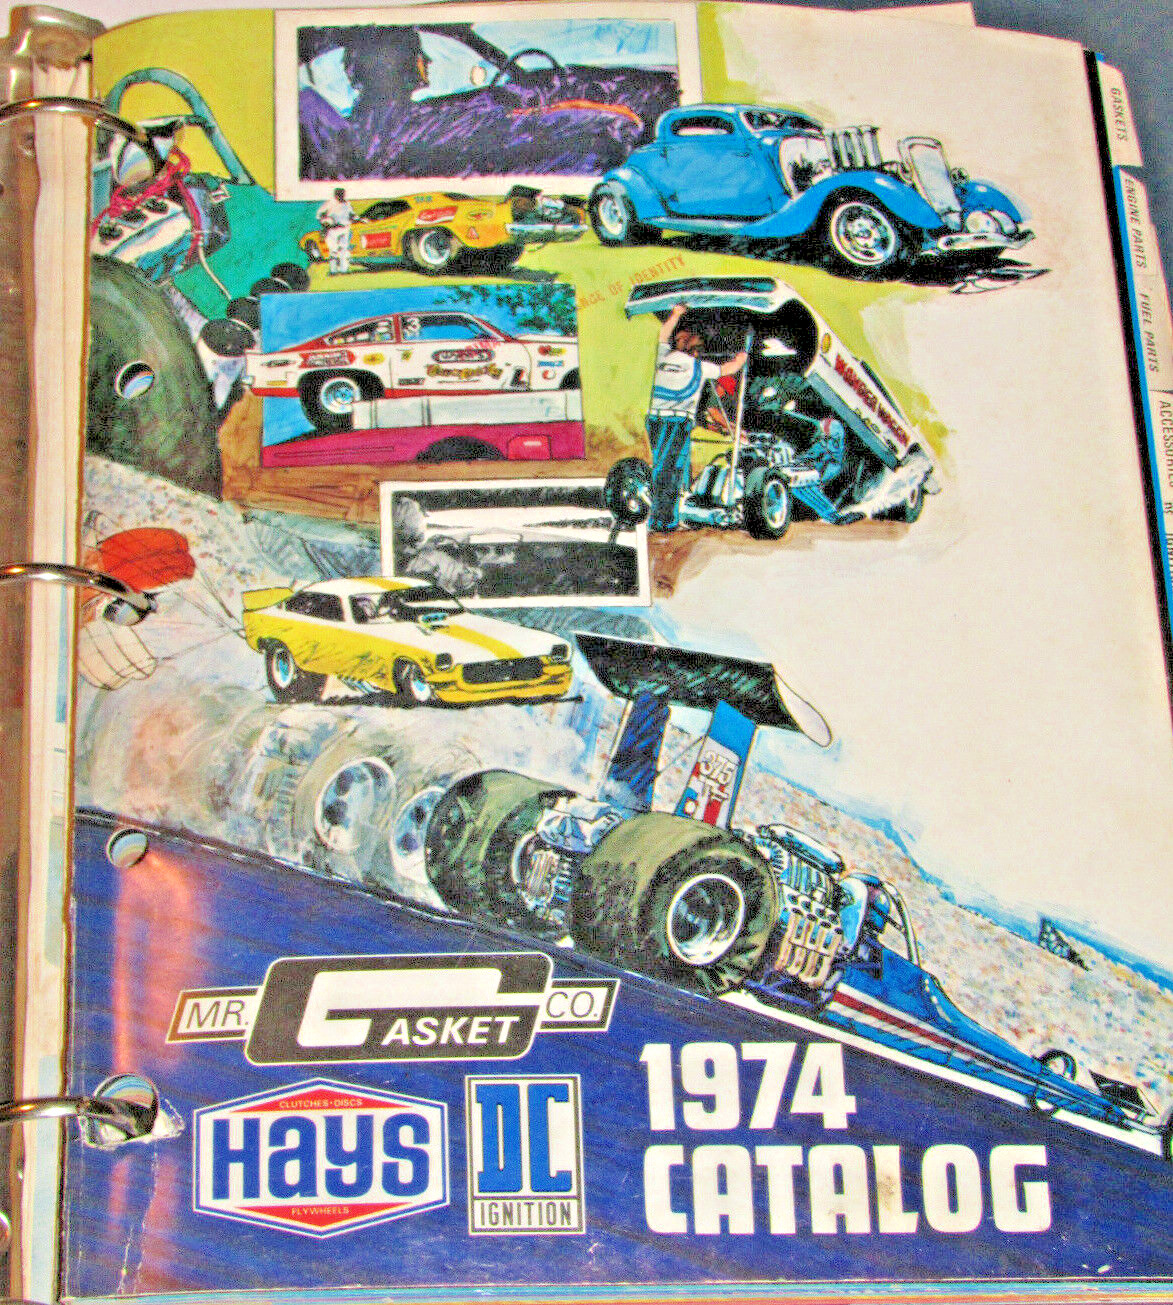 VTG 1974 RACE CAR PARTS CATALOG HAYS CLUTCH/COMPETITION SHIFTERS/ENGINE PARTS+